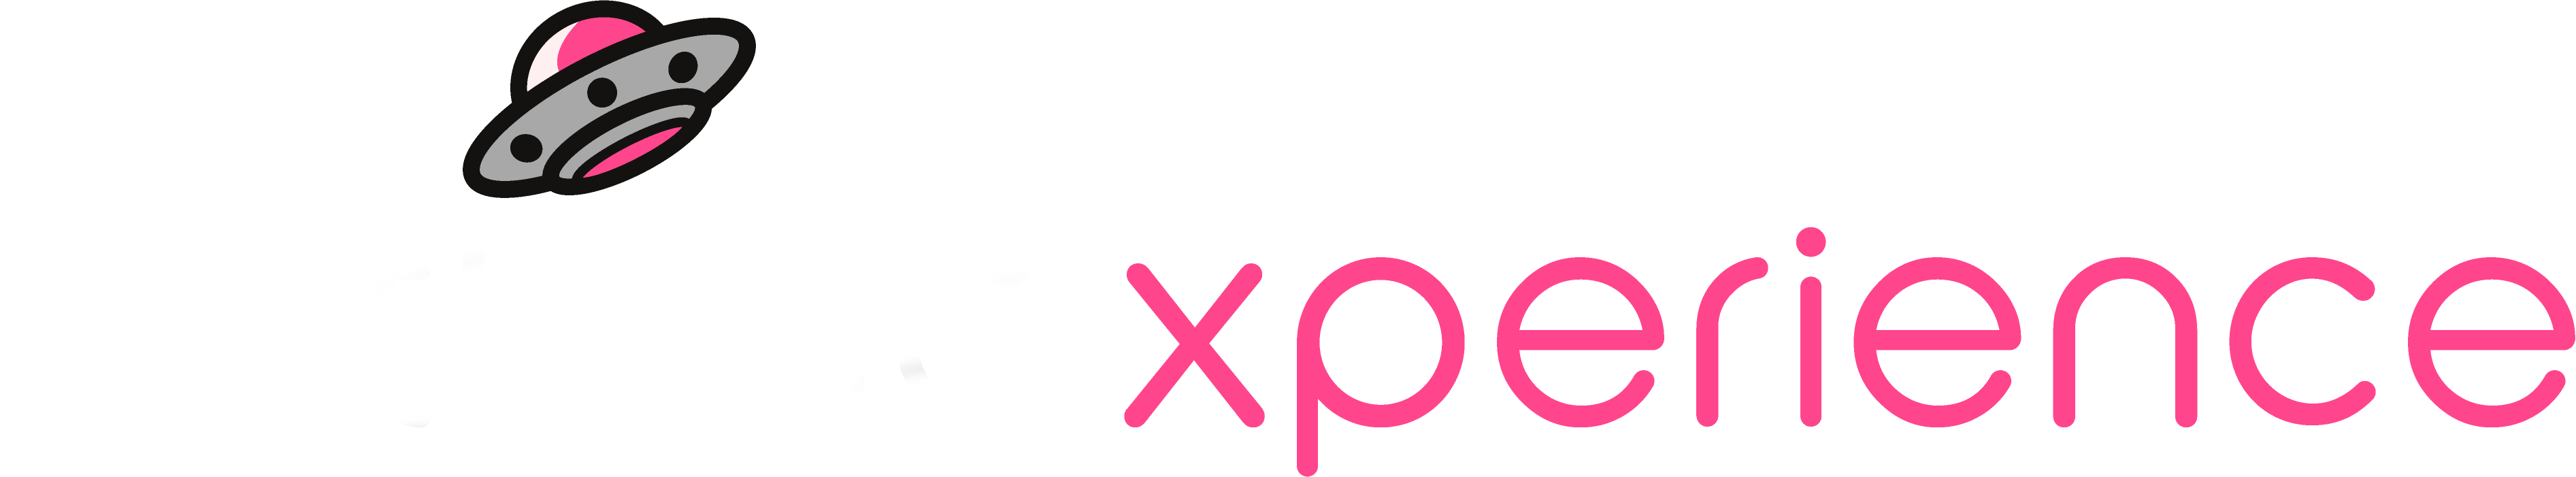 xperience-logo-white